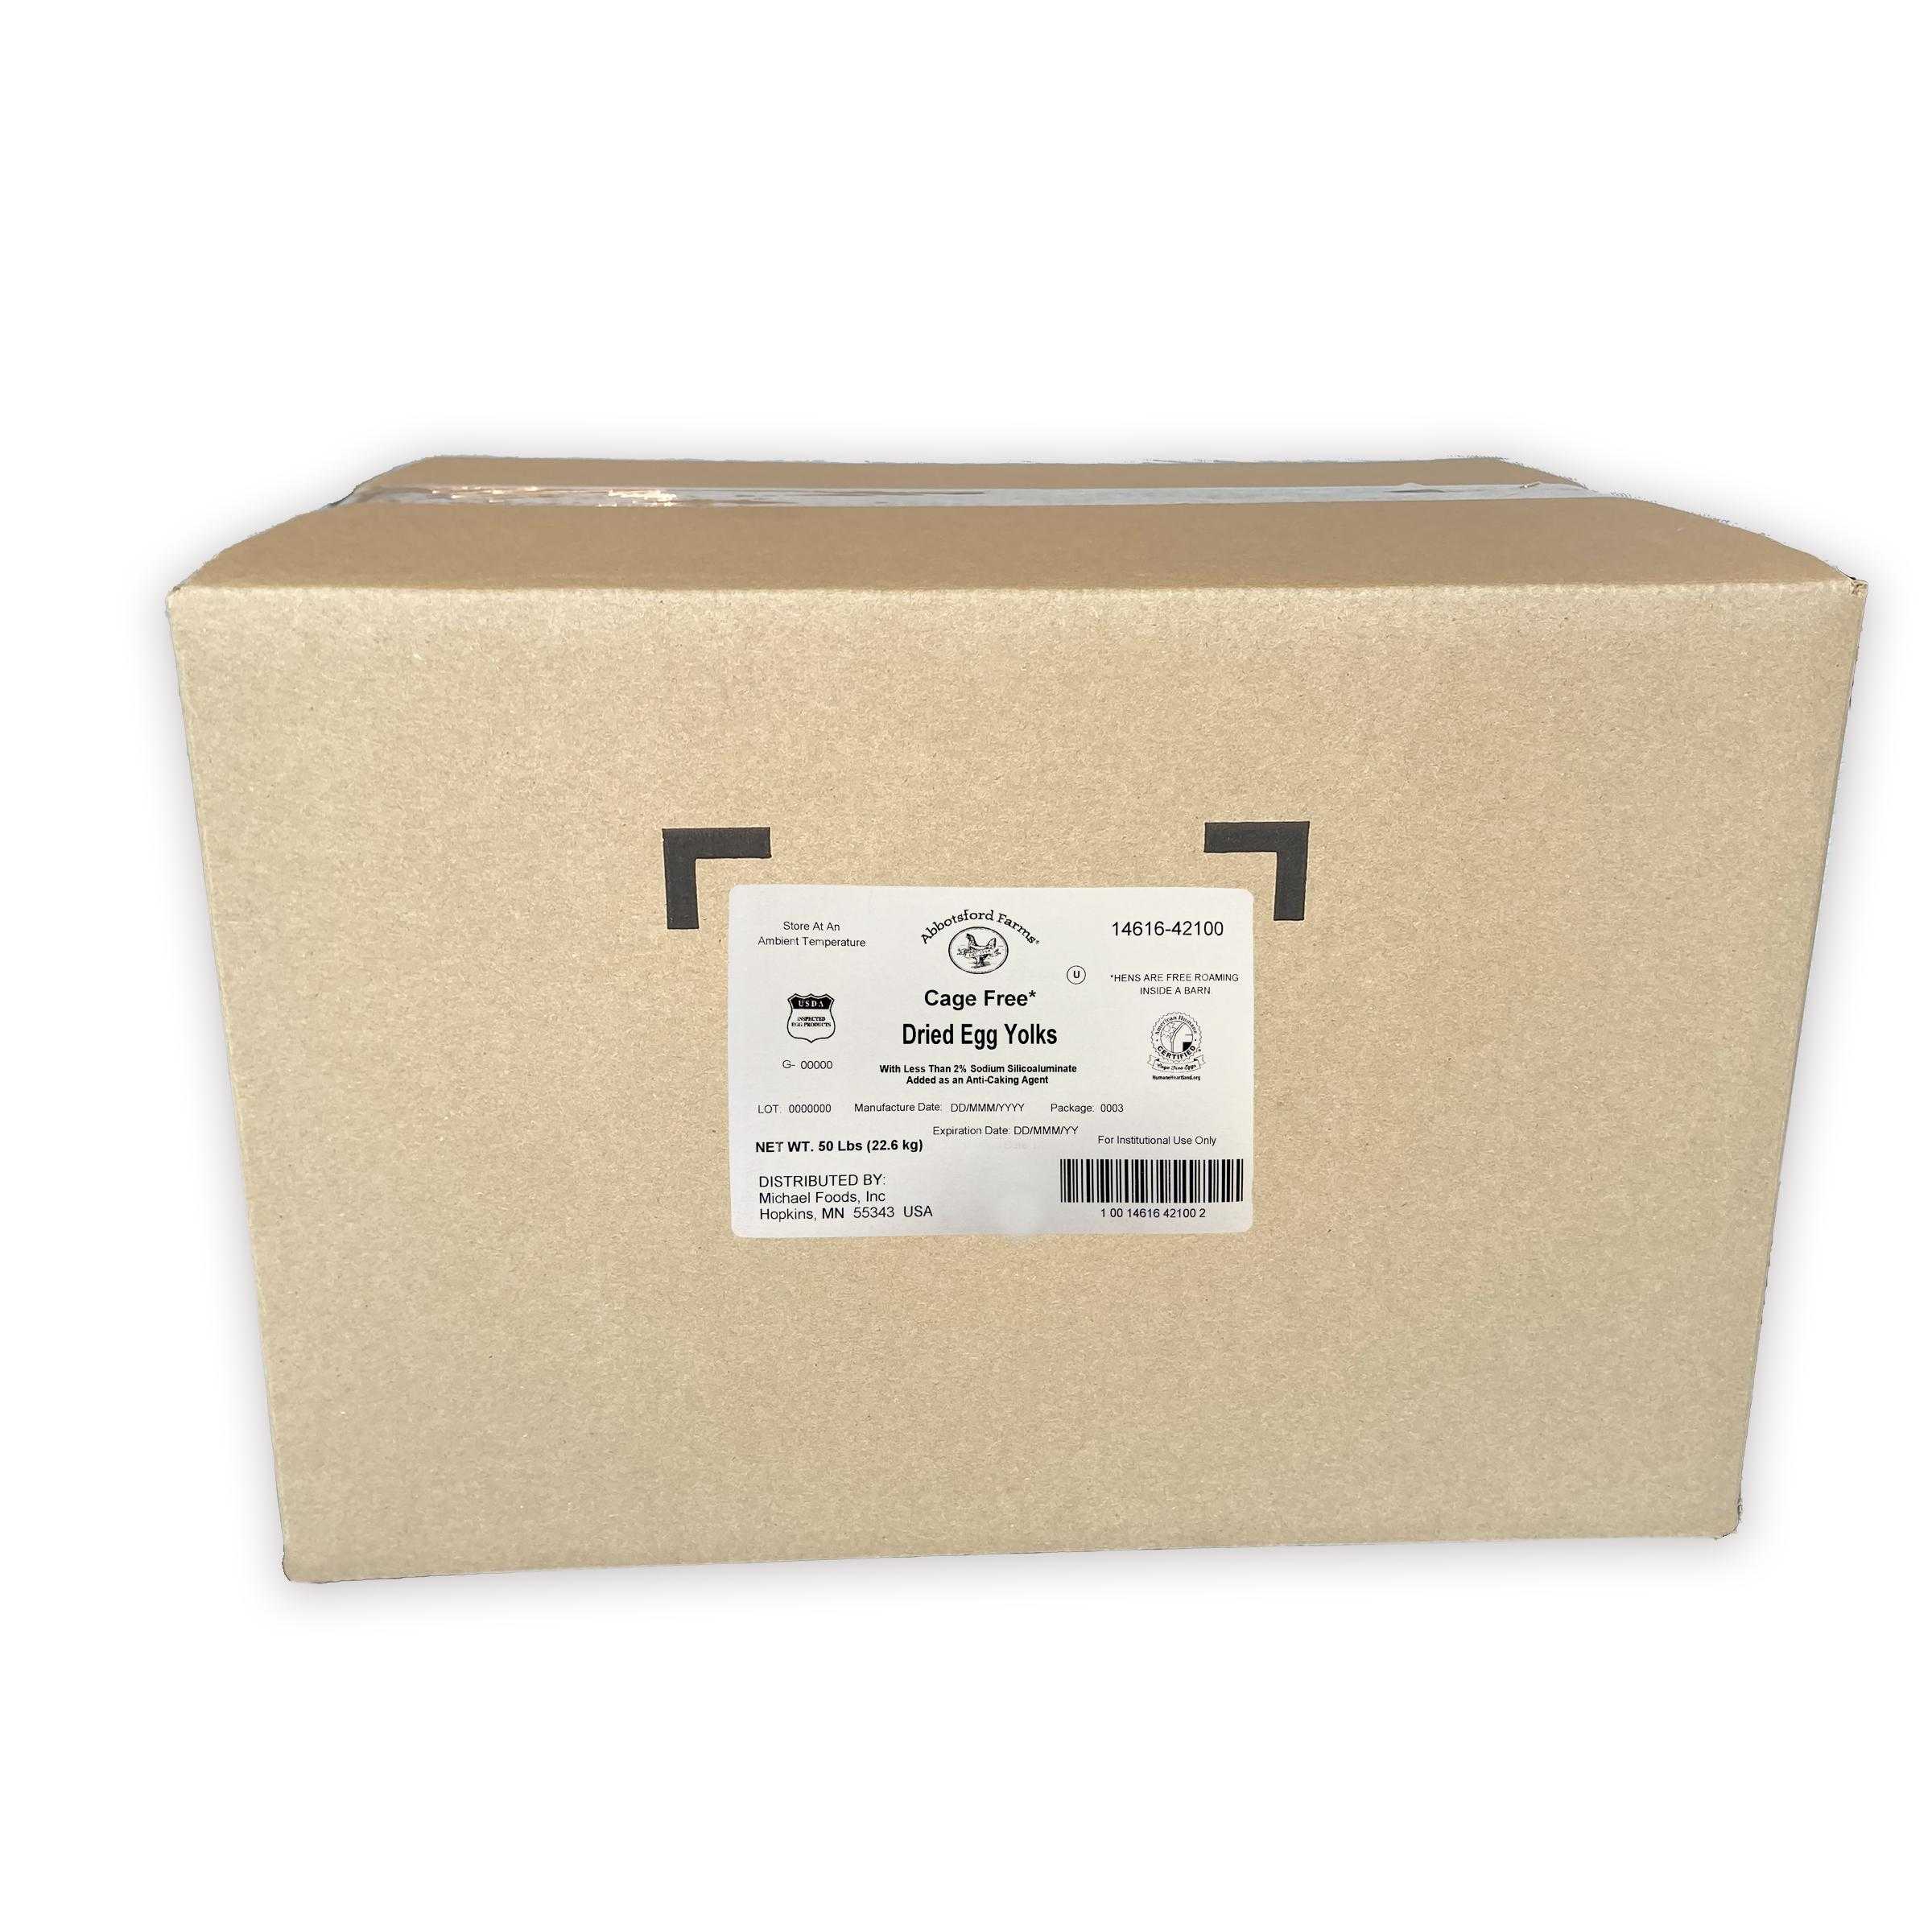 Abbotsford Farms® American Humane Certified Cage Free Dried Free Flow Yolk, 1/50 Lb Box